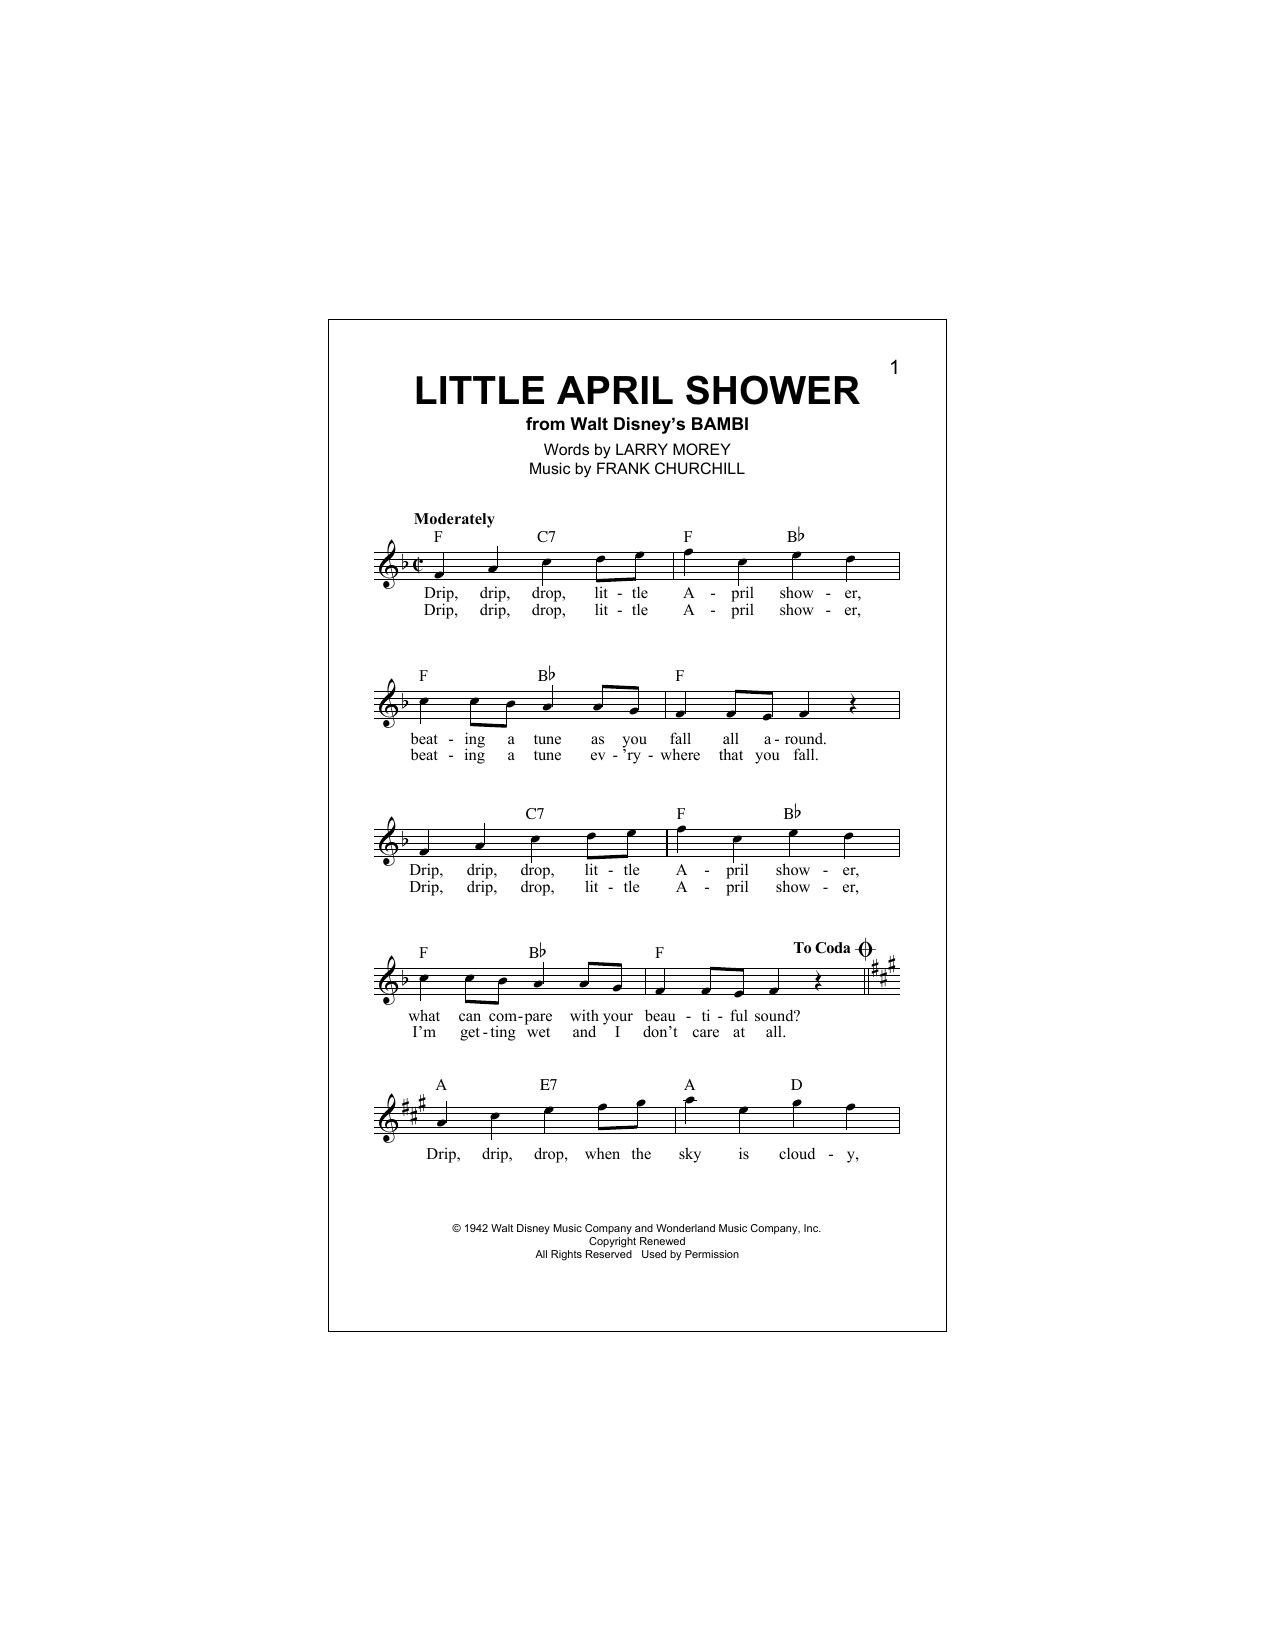 Larry Morey Little April Shower Sheet Music Notes & Chords for Melody Line, Lyrics & Chords - Download or Print PDF